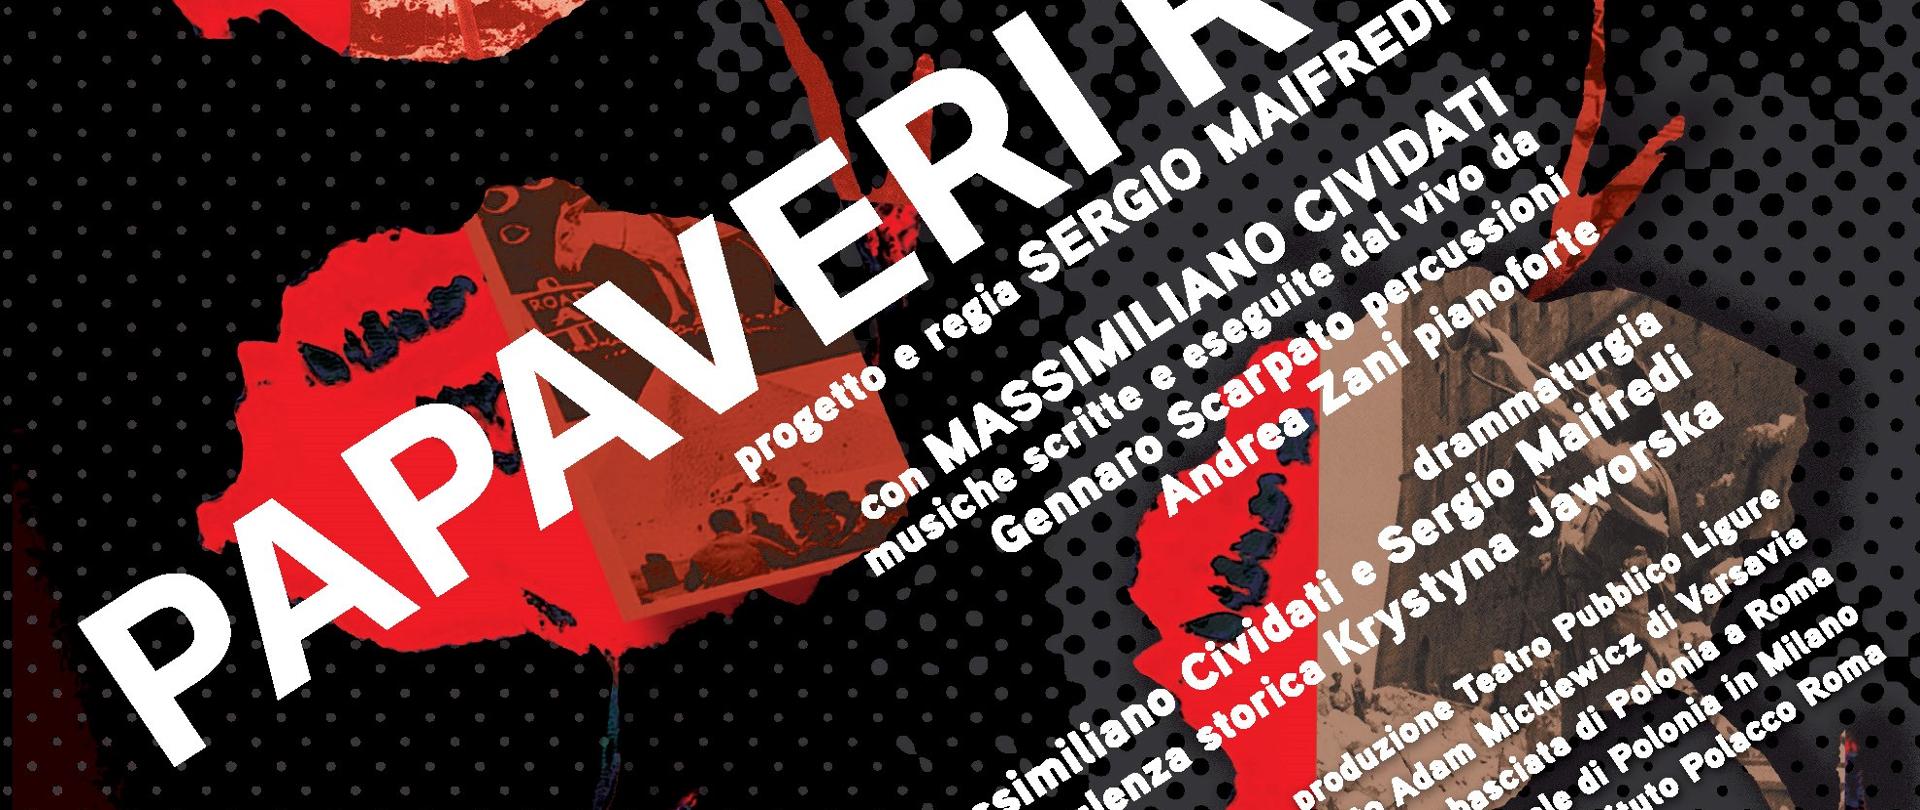 Plakat Papaveri Rossi a Milano